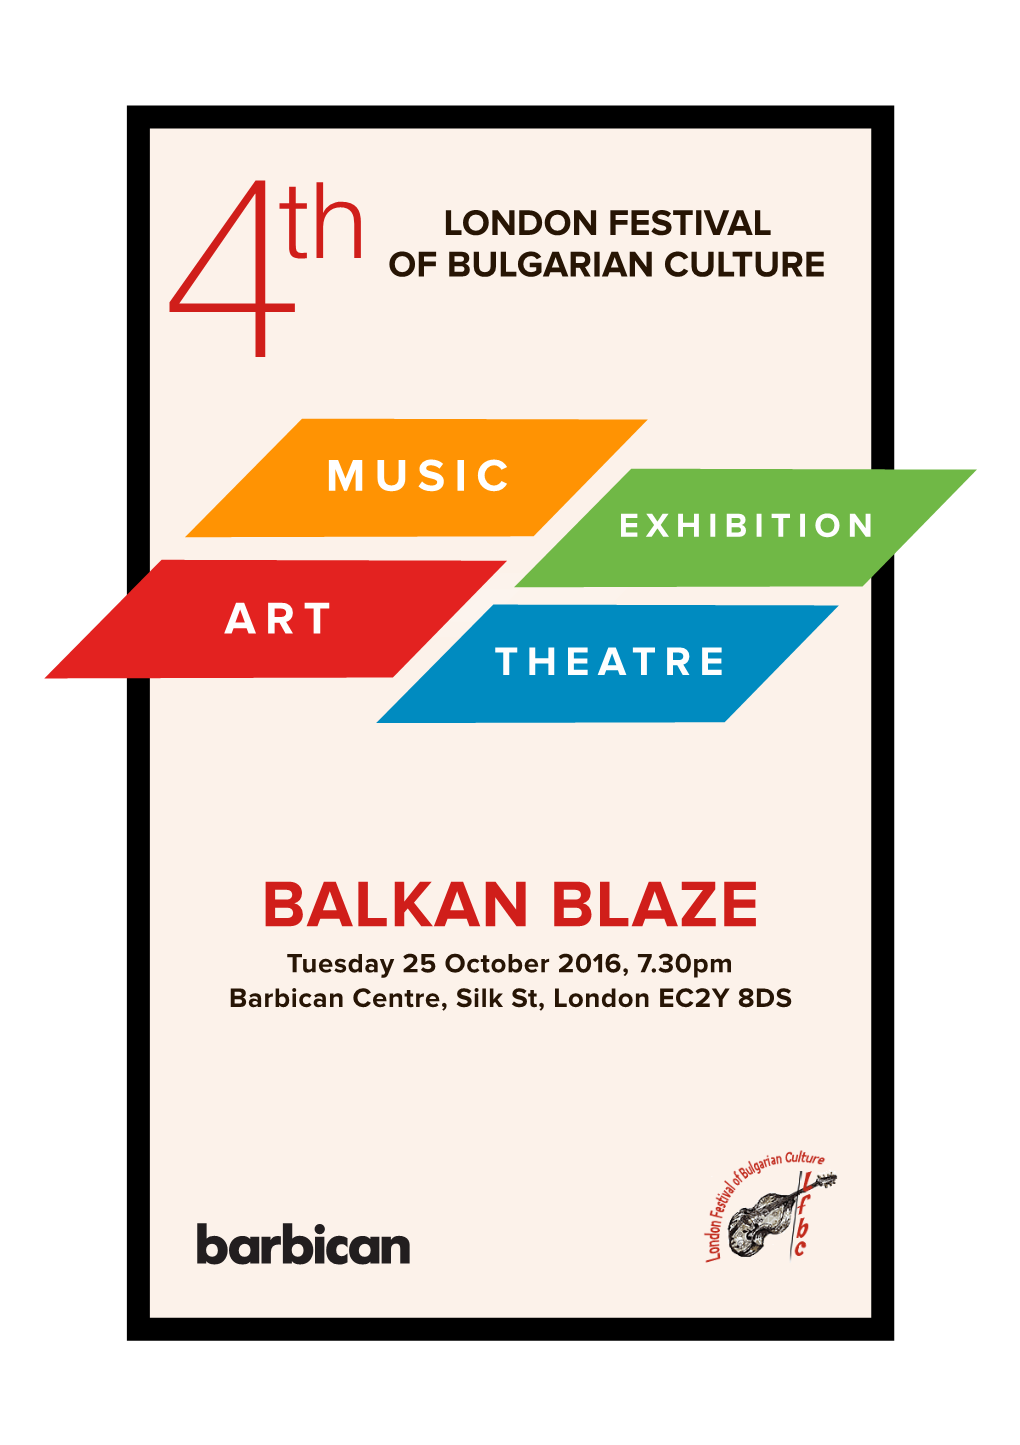 BALKAN BLAZE Tuesday 25 October 2016, 7.30Pm Barbican Centre, Silk St, London EC2Y 8DS